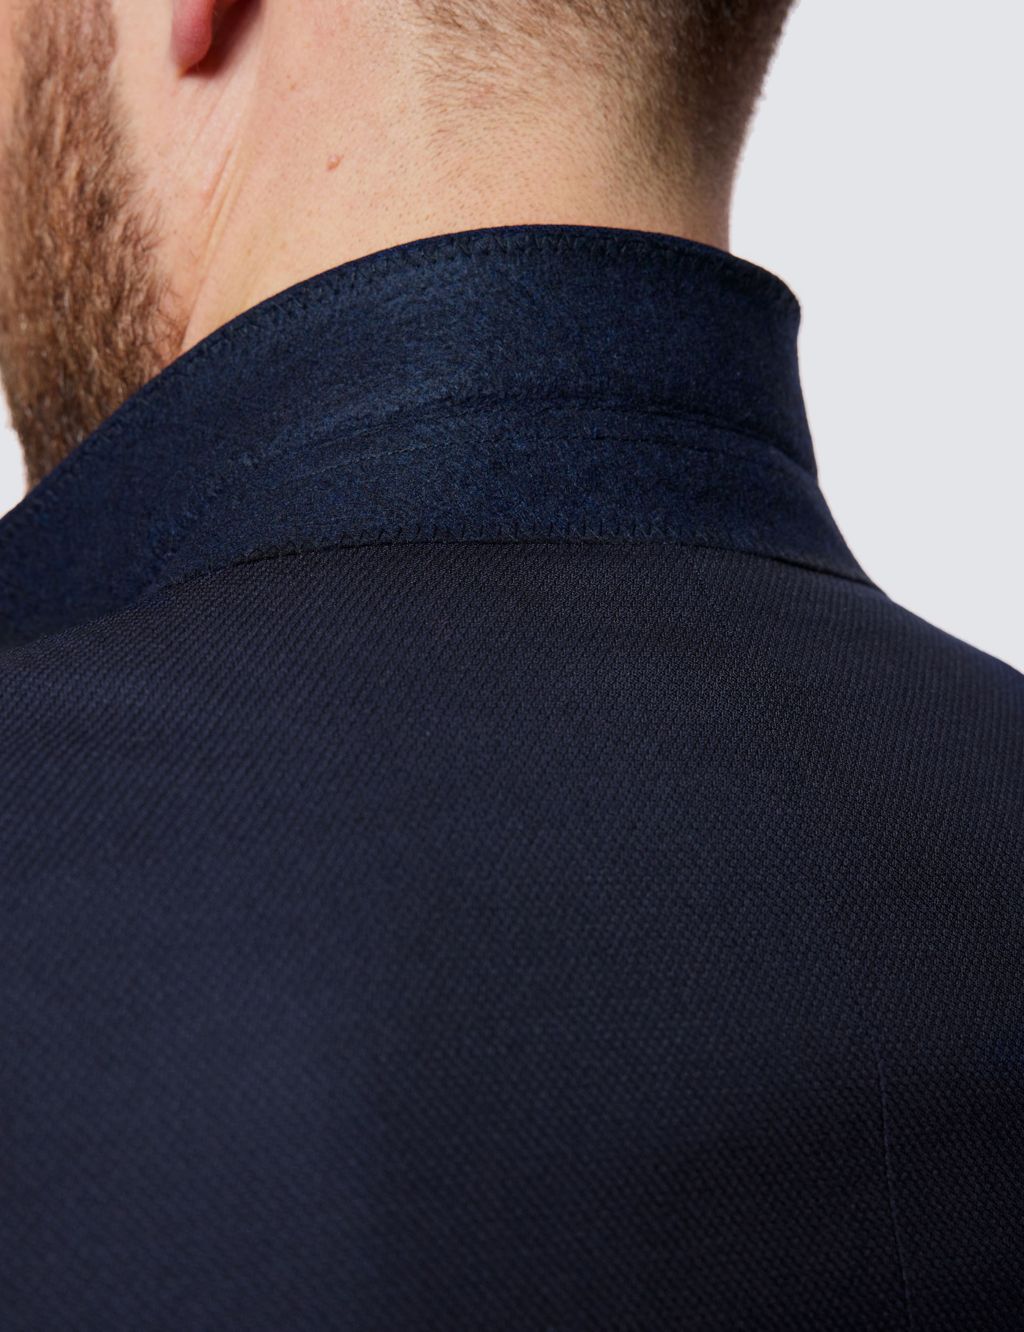 Slim Fit Pure Wool Textured Suit Jacket image 6